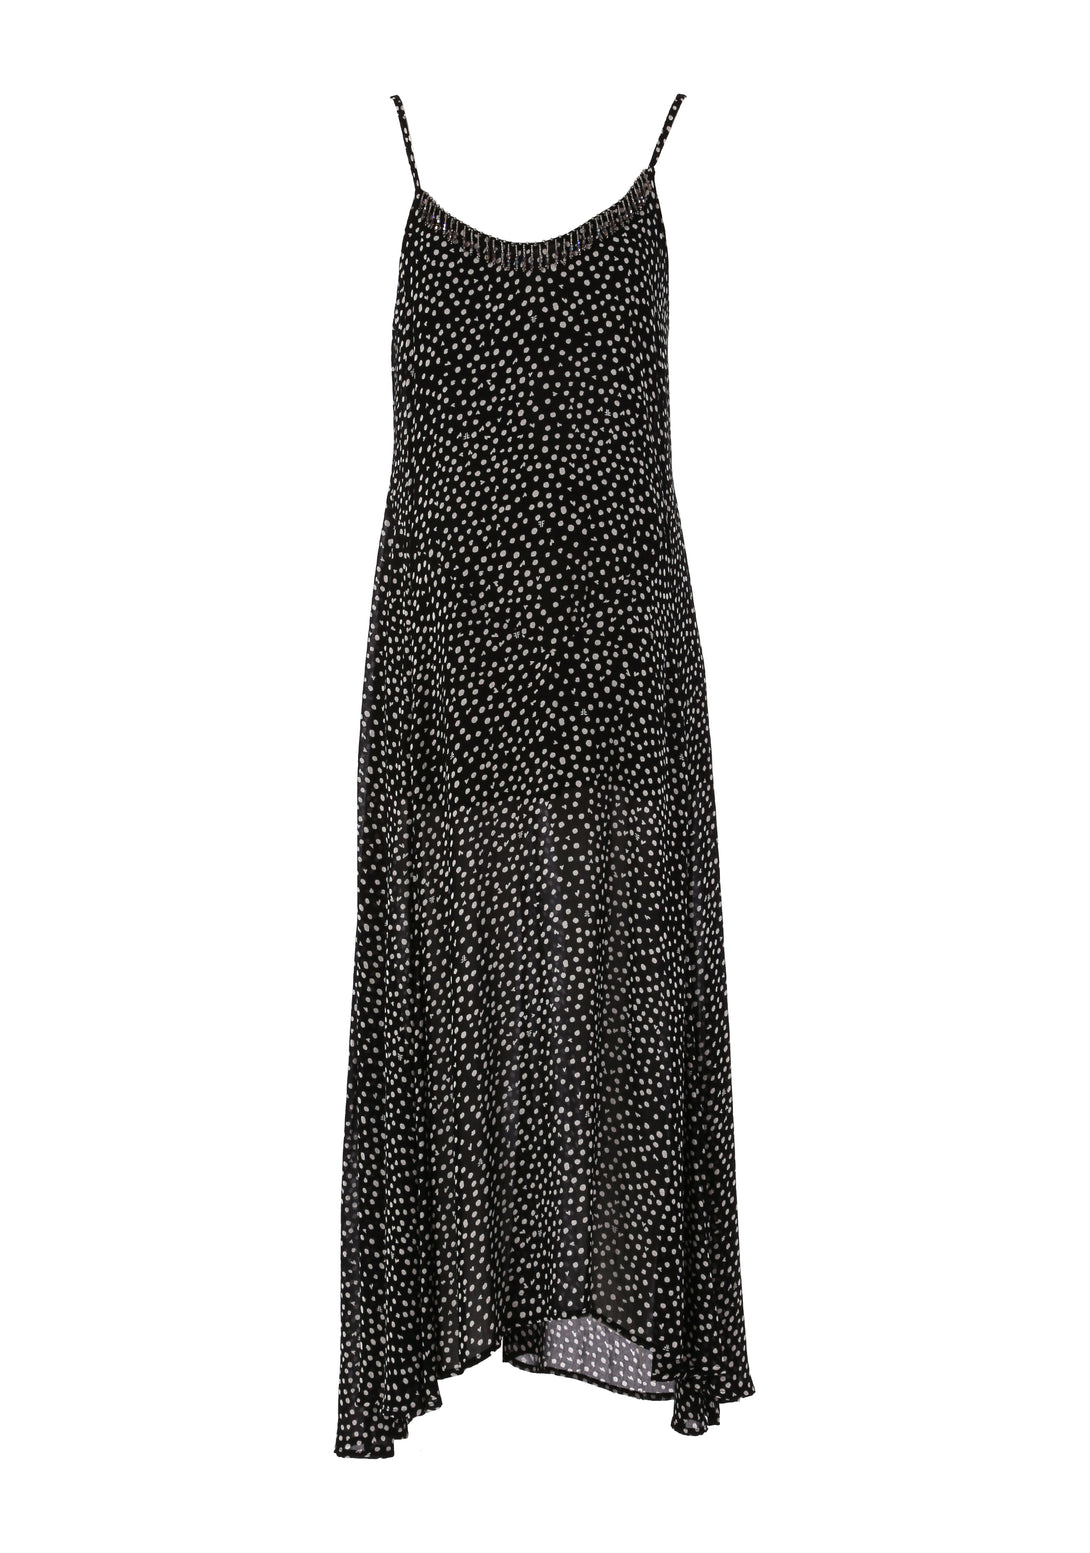 Long sleeveless dress with polka dots pattern